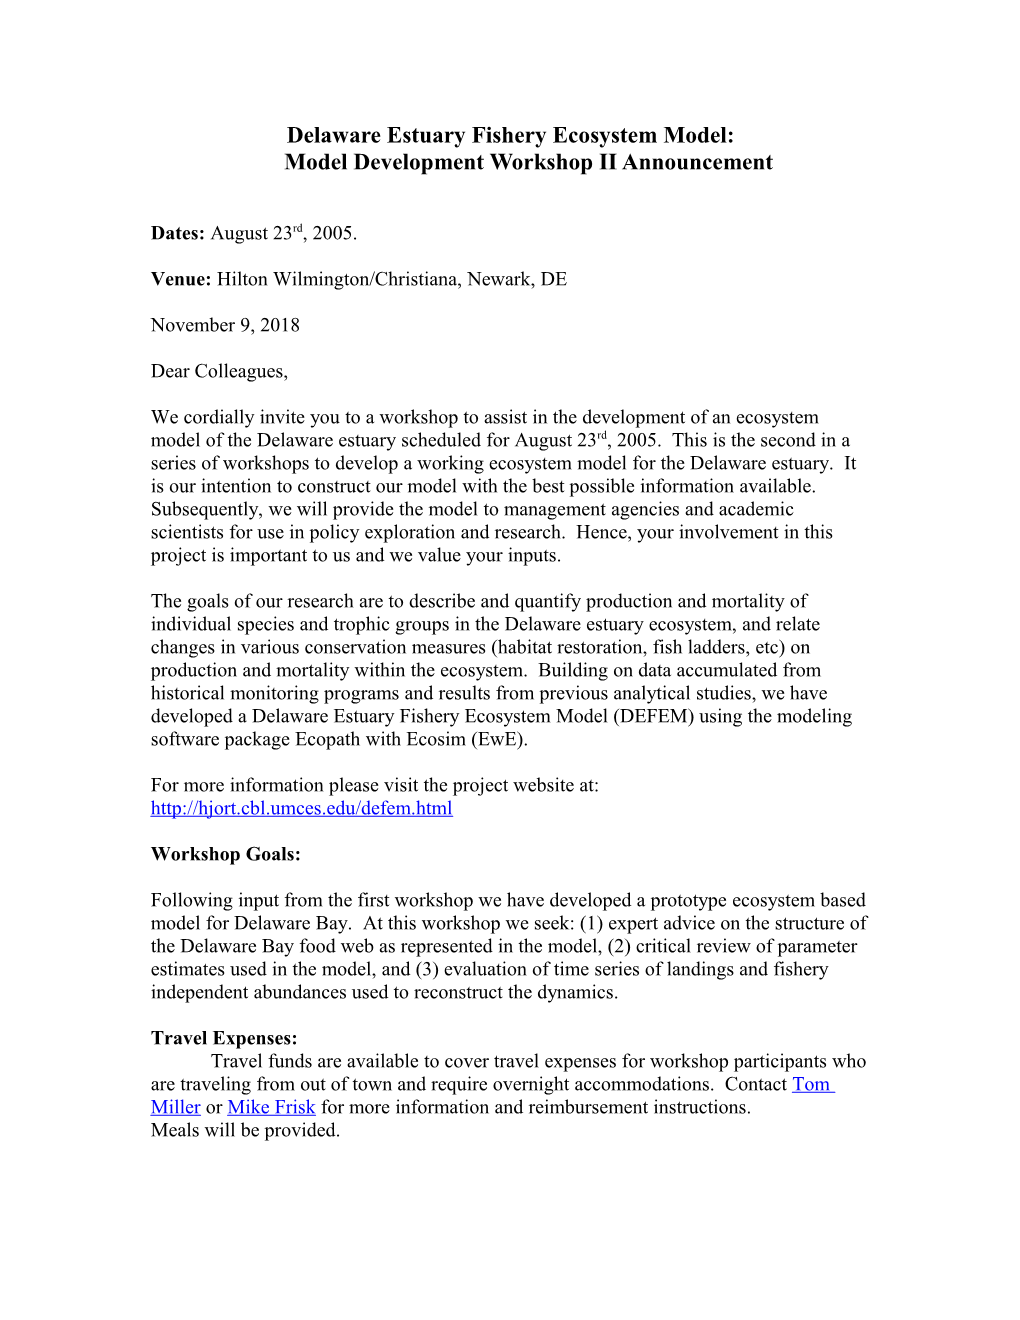 Delaware Estuary Fishery Ecosystem Model:Model Development Workshop II Announcement